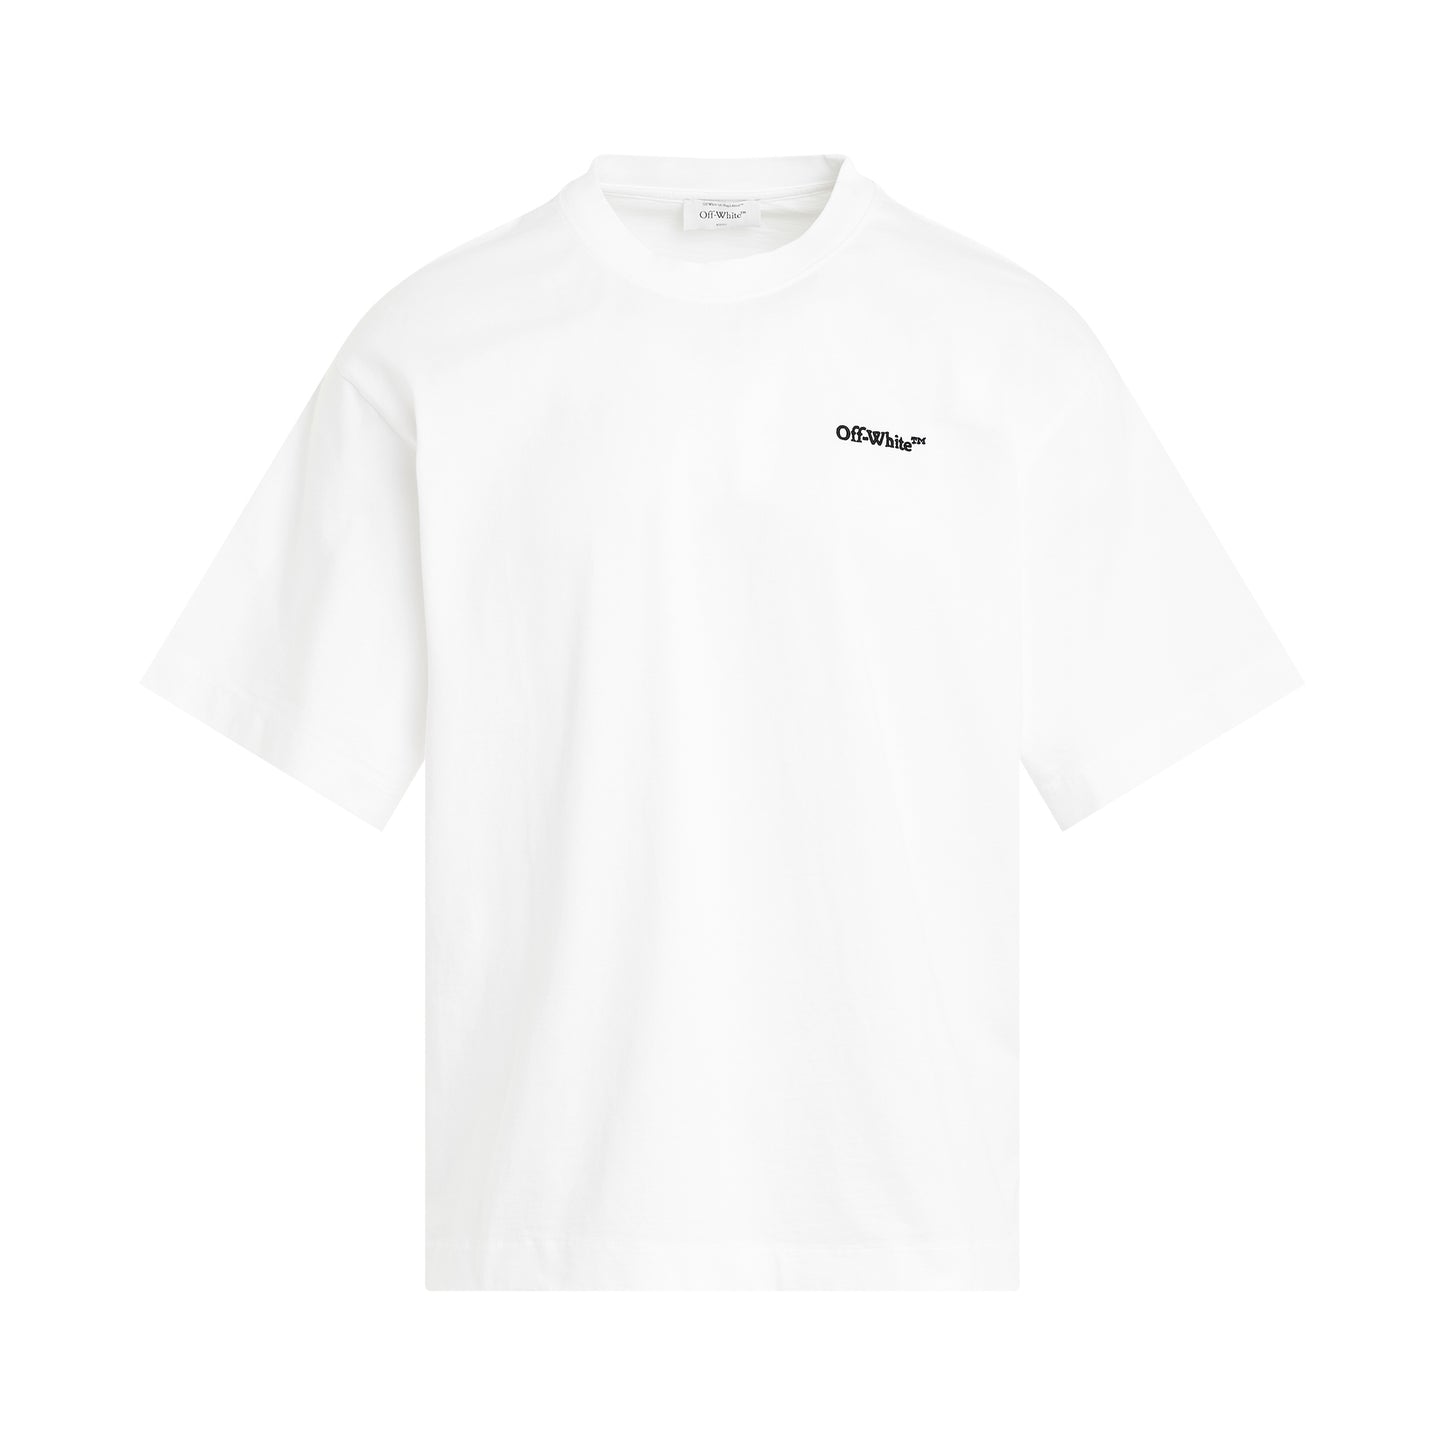 Tattoo Arrow Skate T-Shirt in White/Black